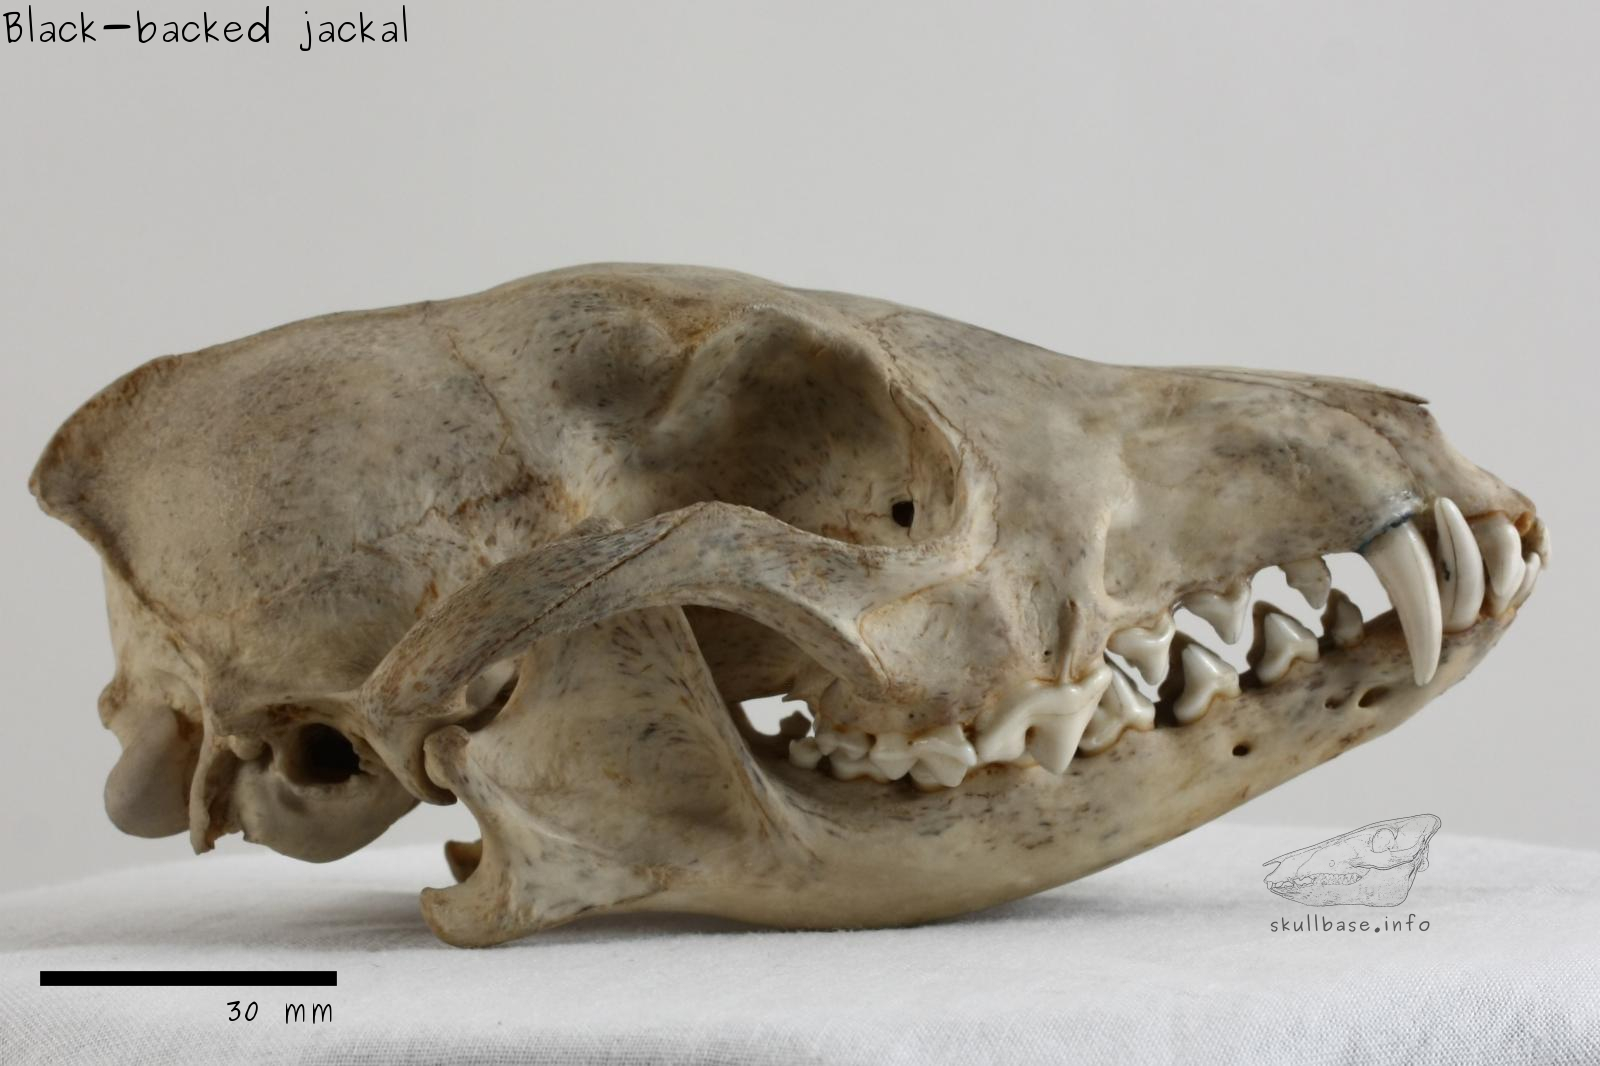 Black-backed jackal (Canis mesomelas) skull lateral view